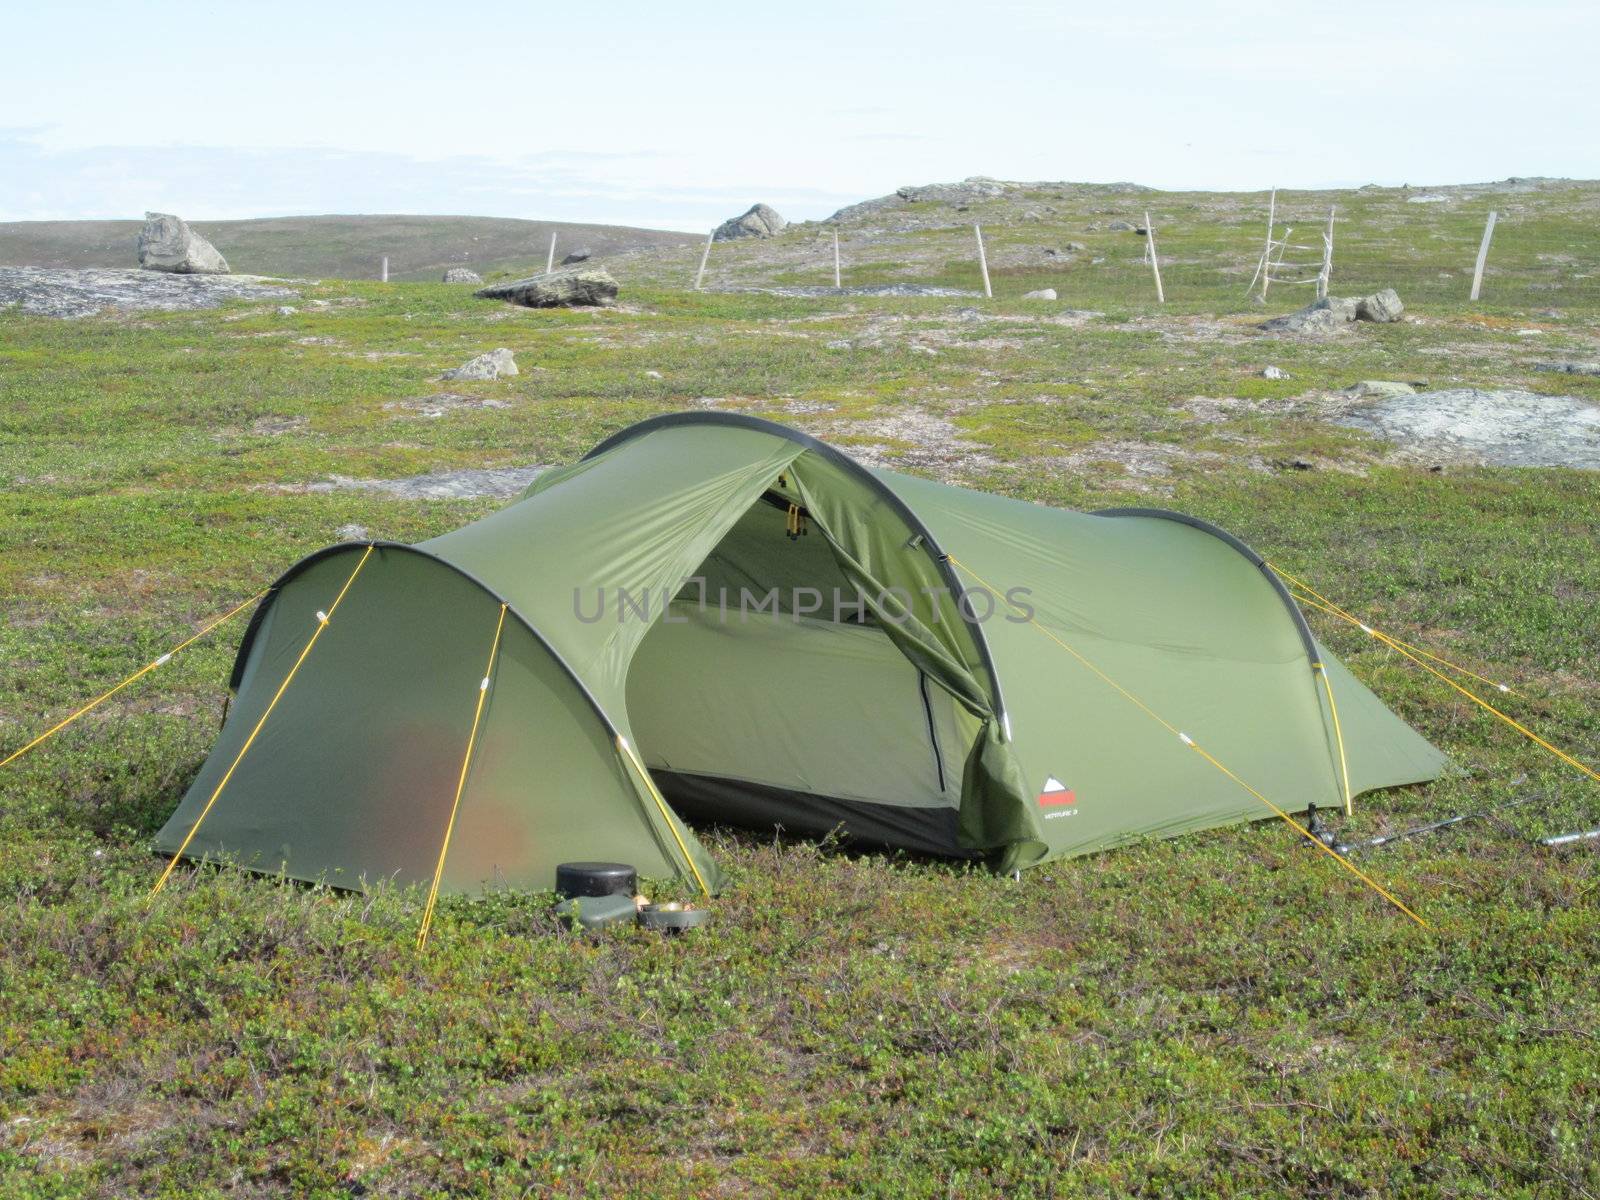 Camping tent in barren landscape.